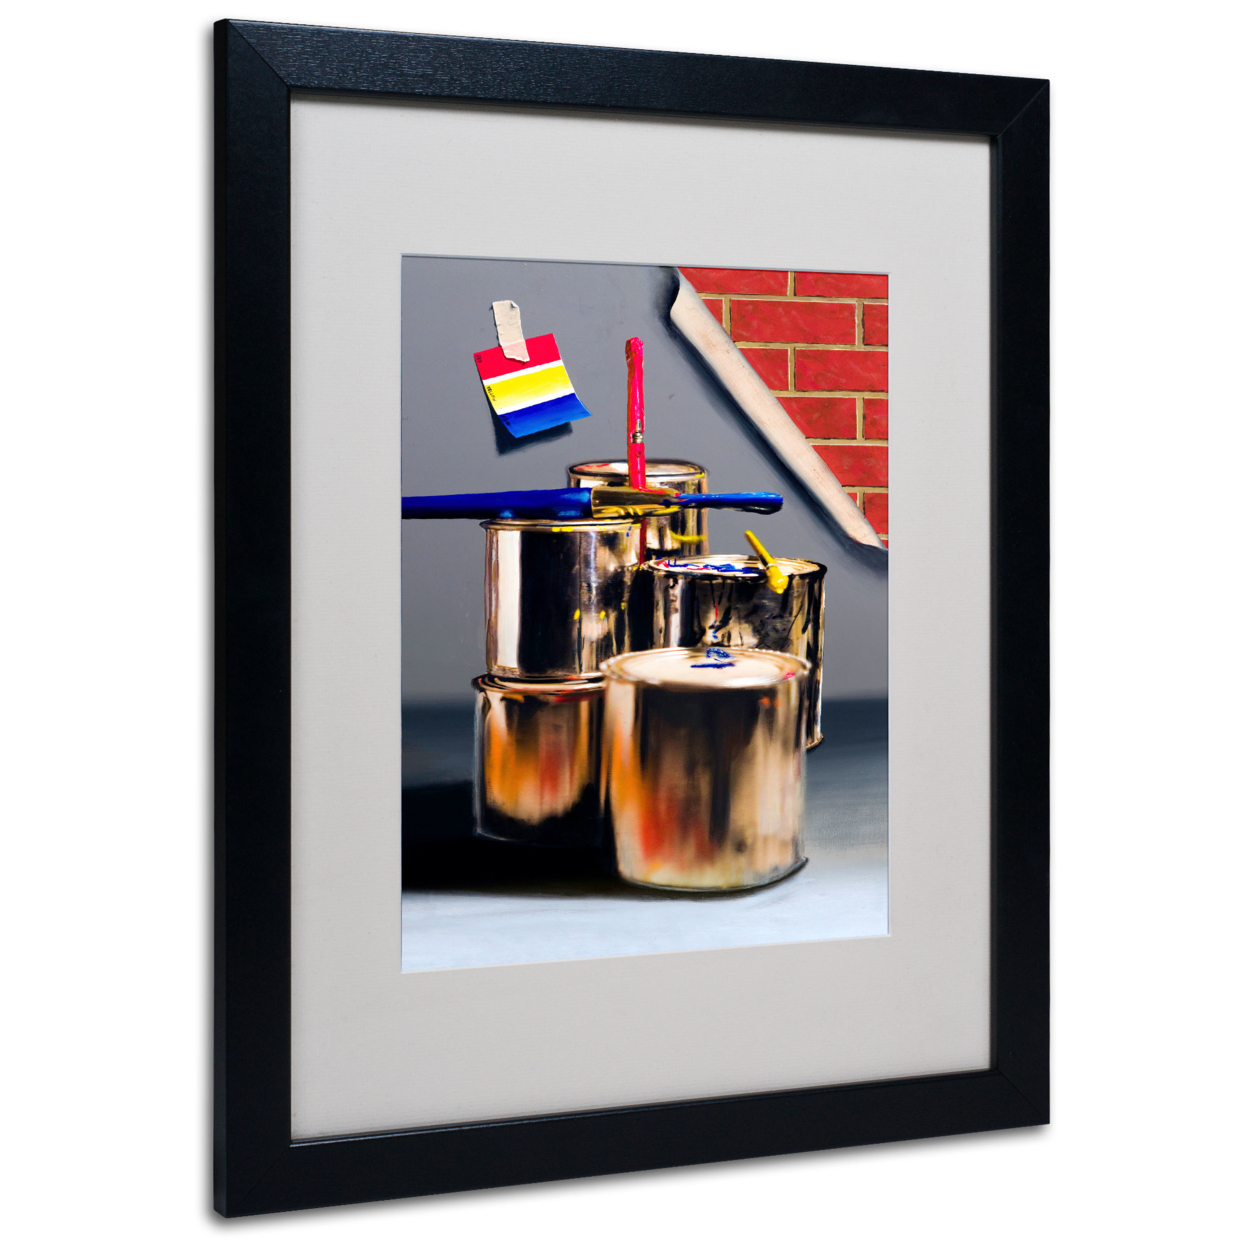 Roderick Stevens 'Primary Colors 01' Black Wooden Framed Art 18 X 22 Inches